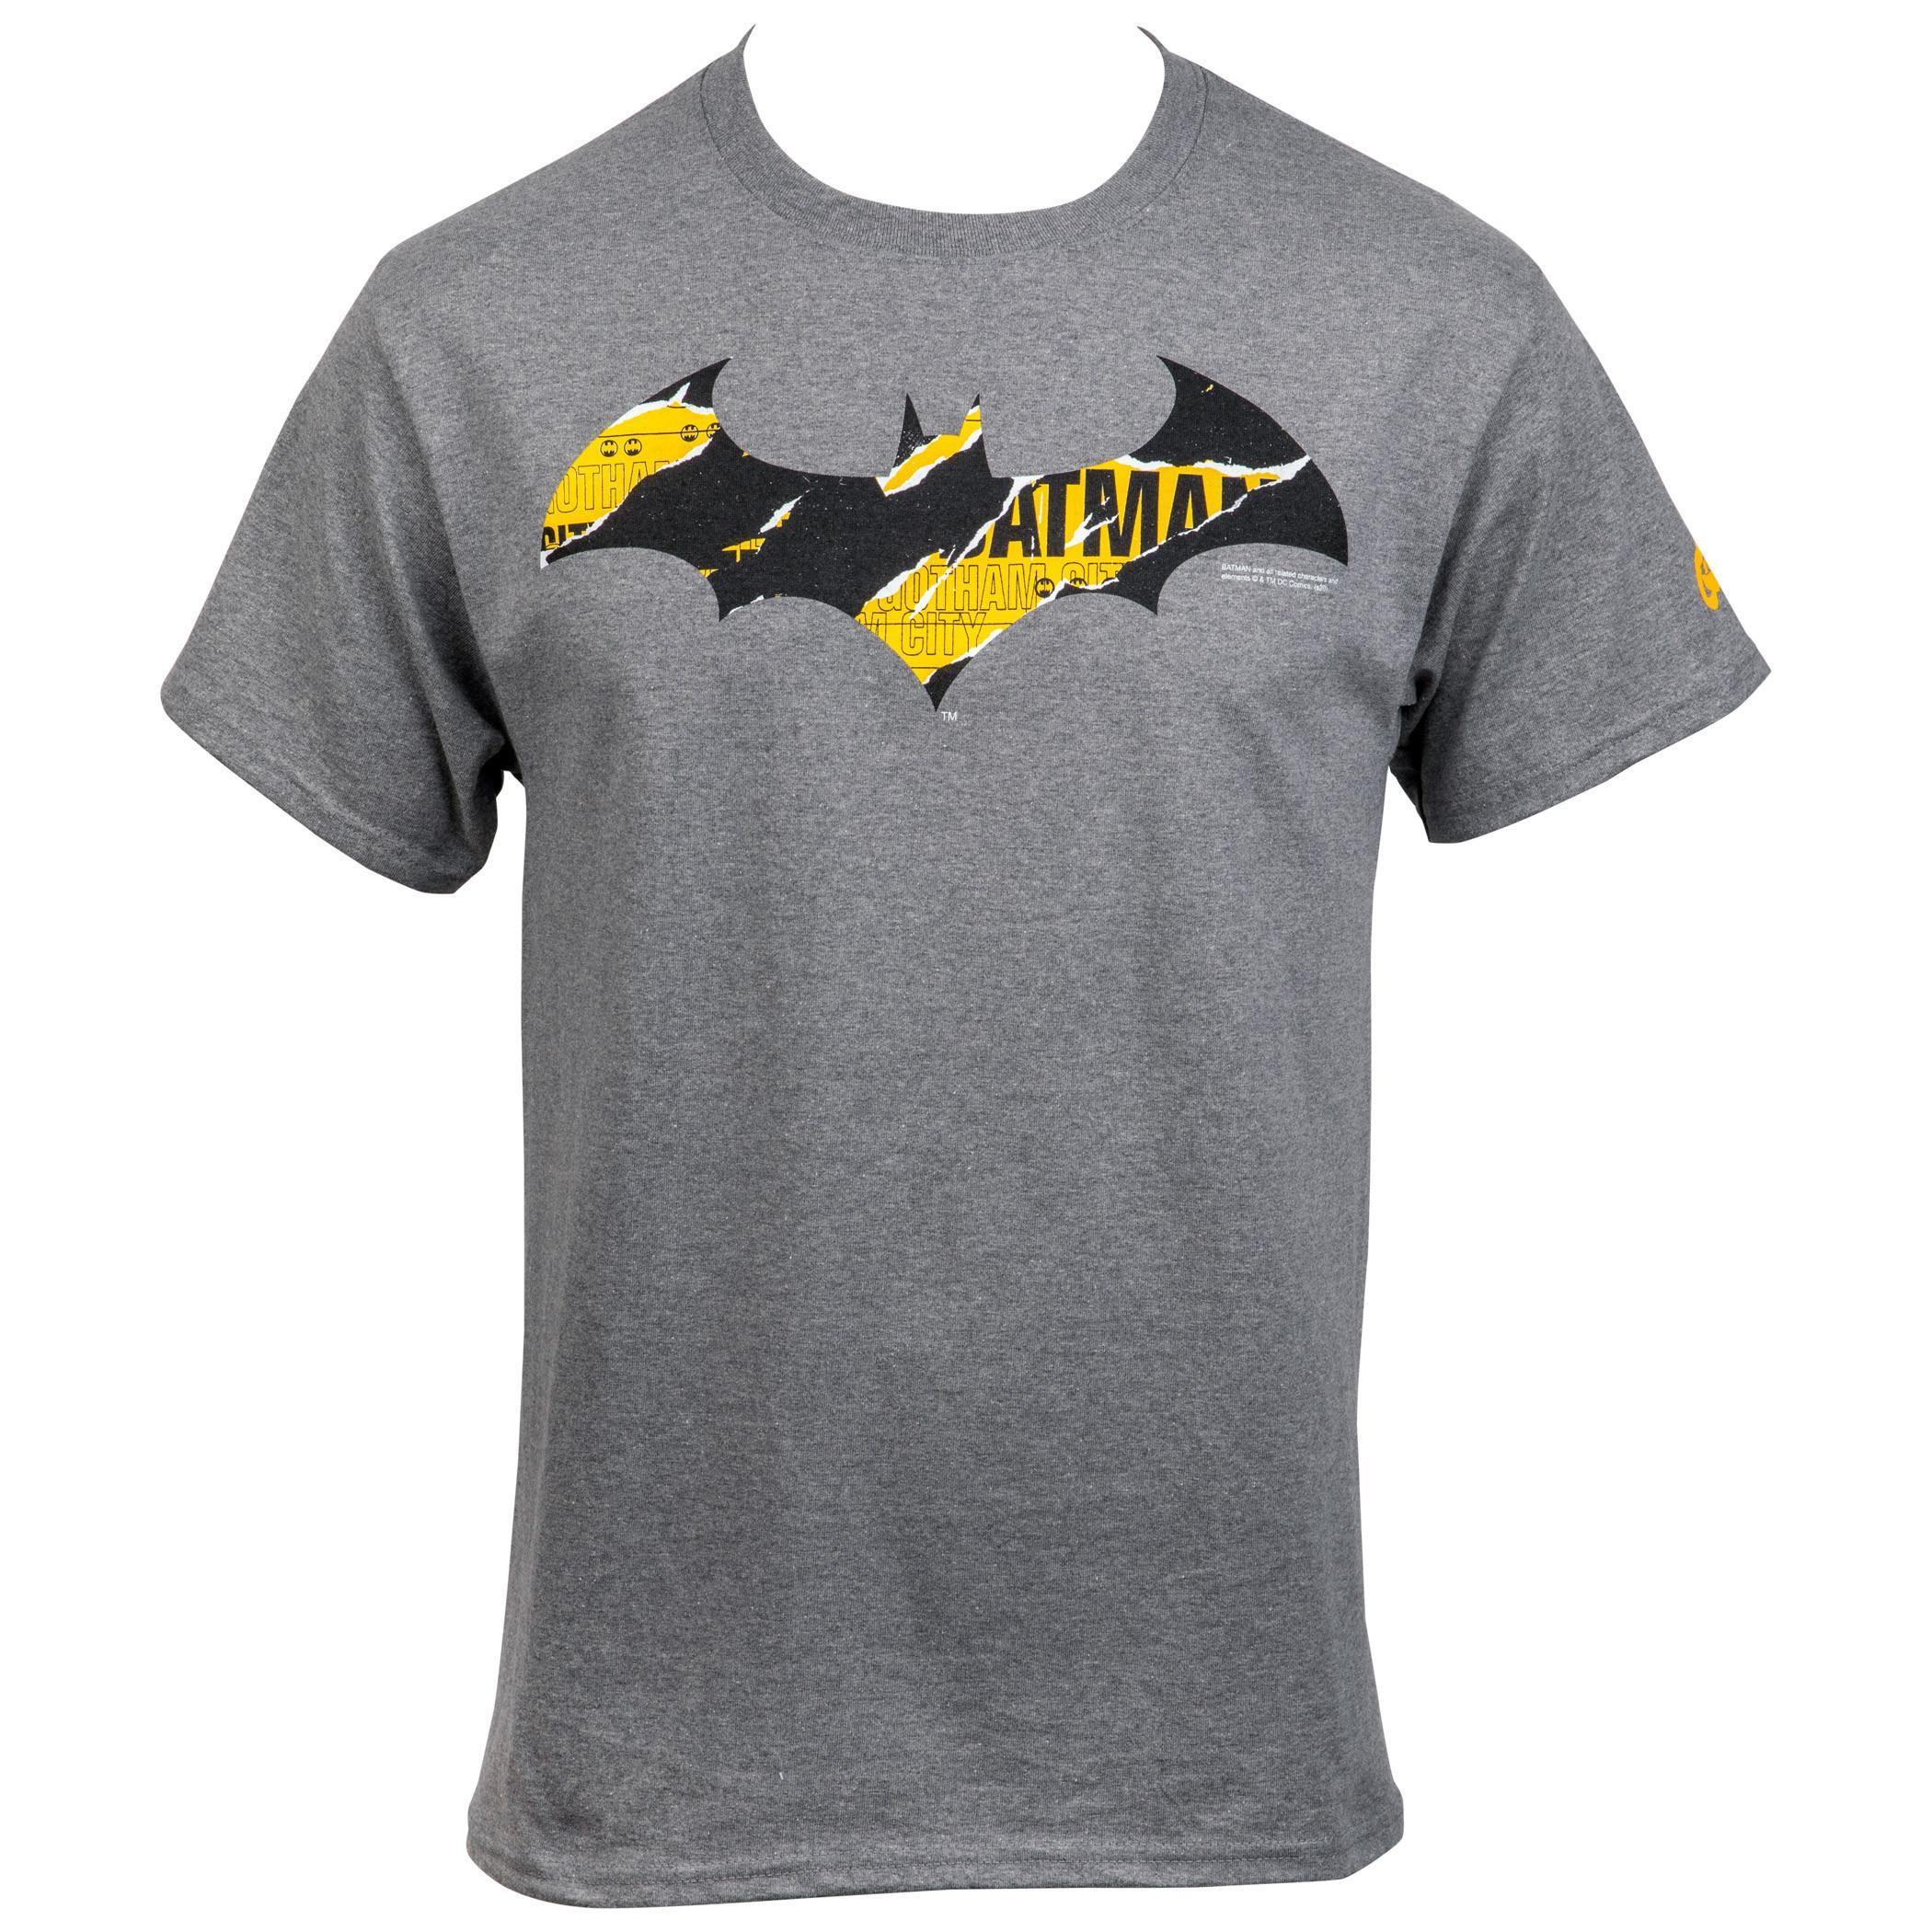 Batman At Work Distressed Symbol T-Shirt Medium